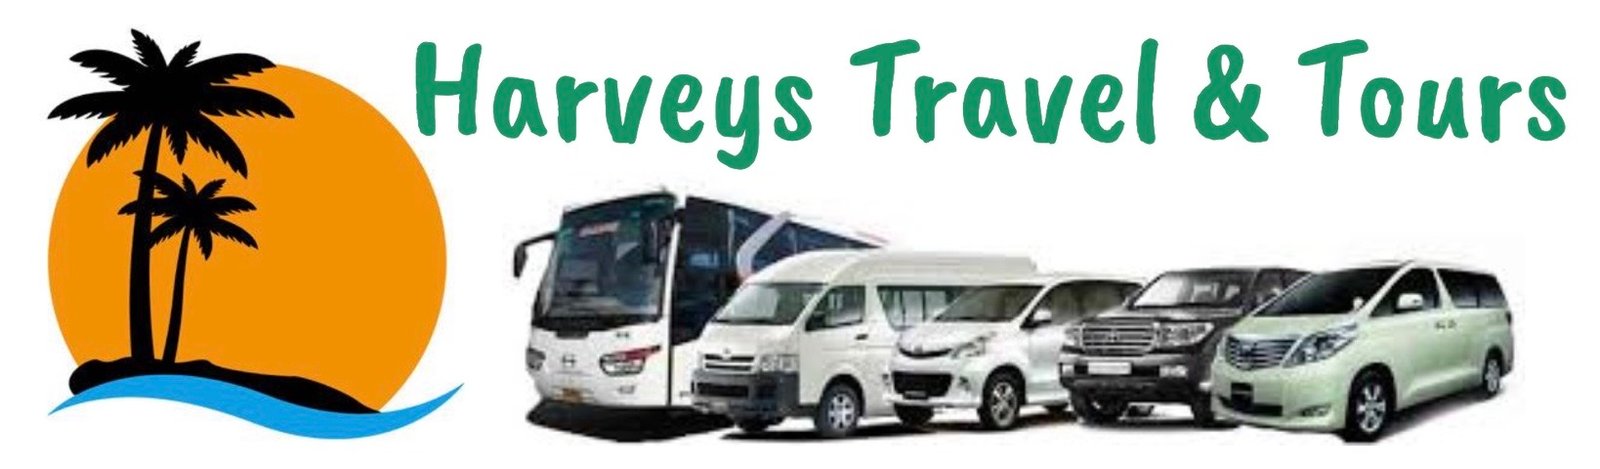 Harveys Travel & Tours